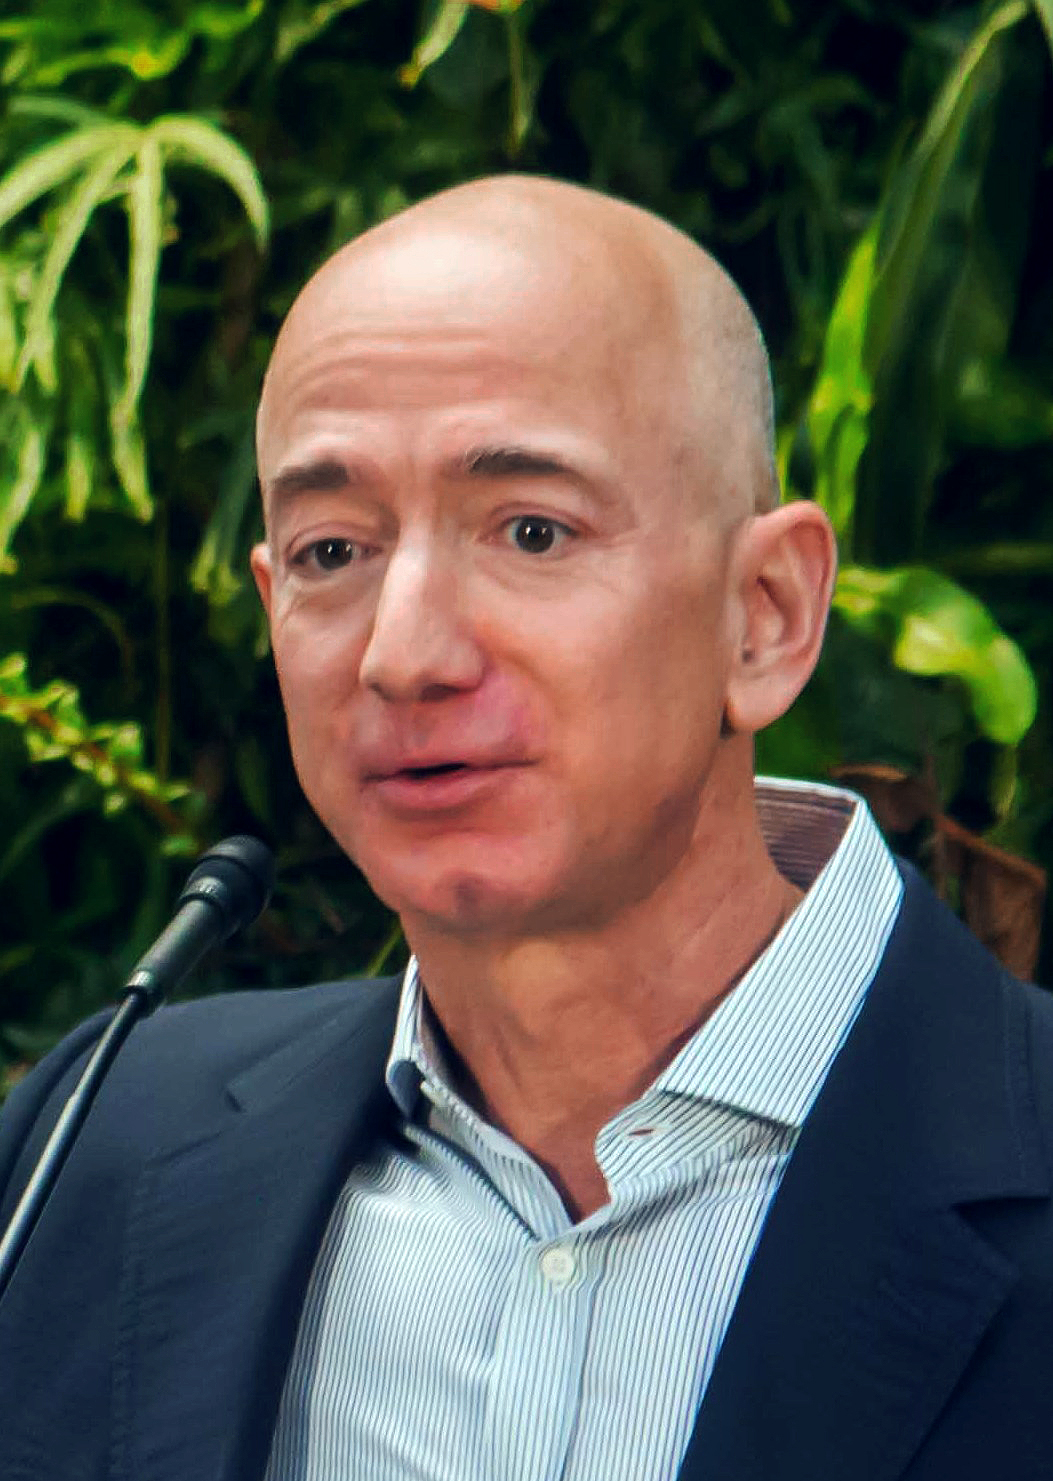 Amazon's Bezos finalizes divorce with $38 bn settlement: report